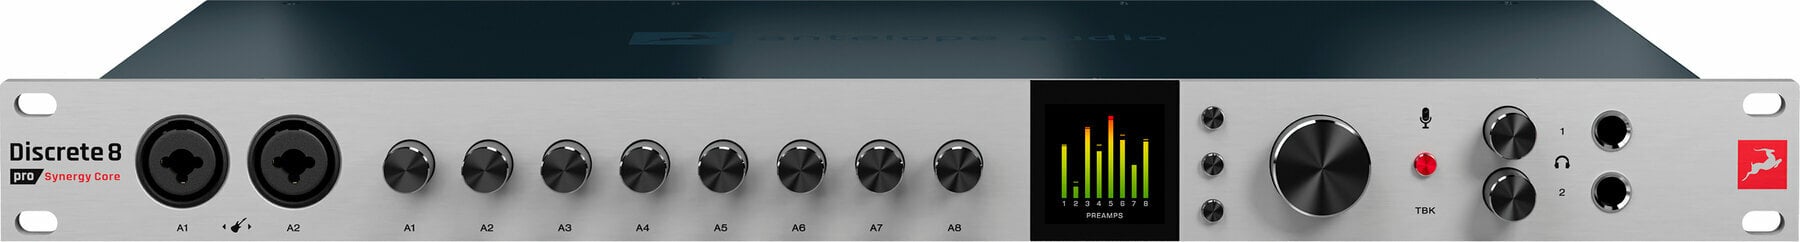 Interface de áudio Thunderbolt Antelope Audio Discrete 8 Pro Synergy Core